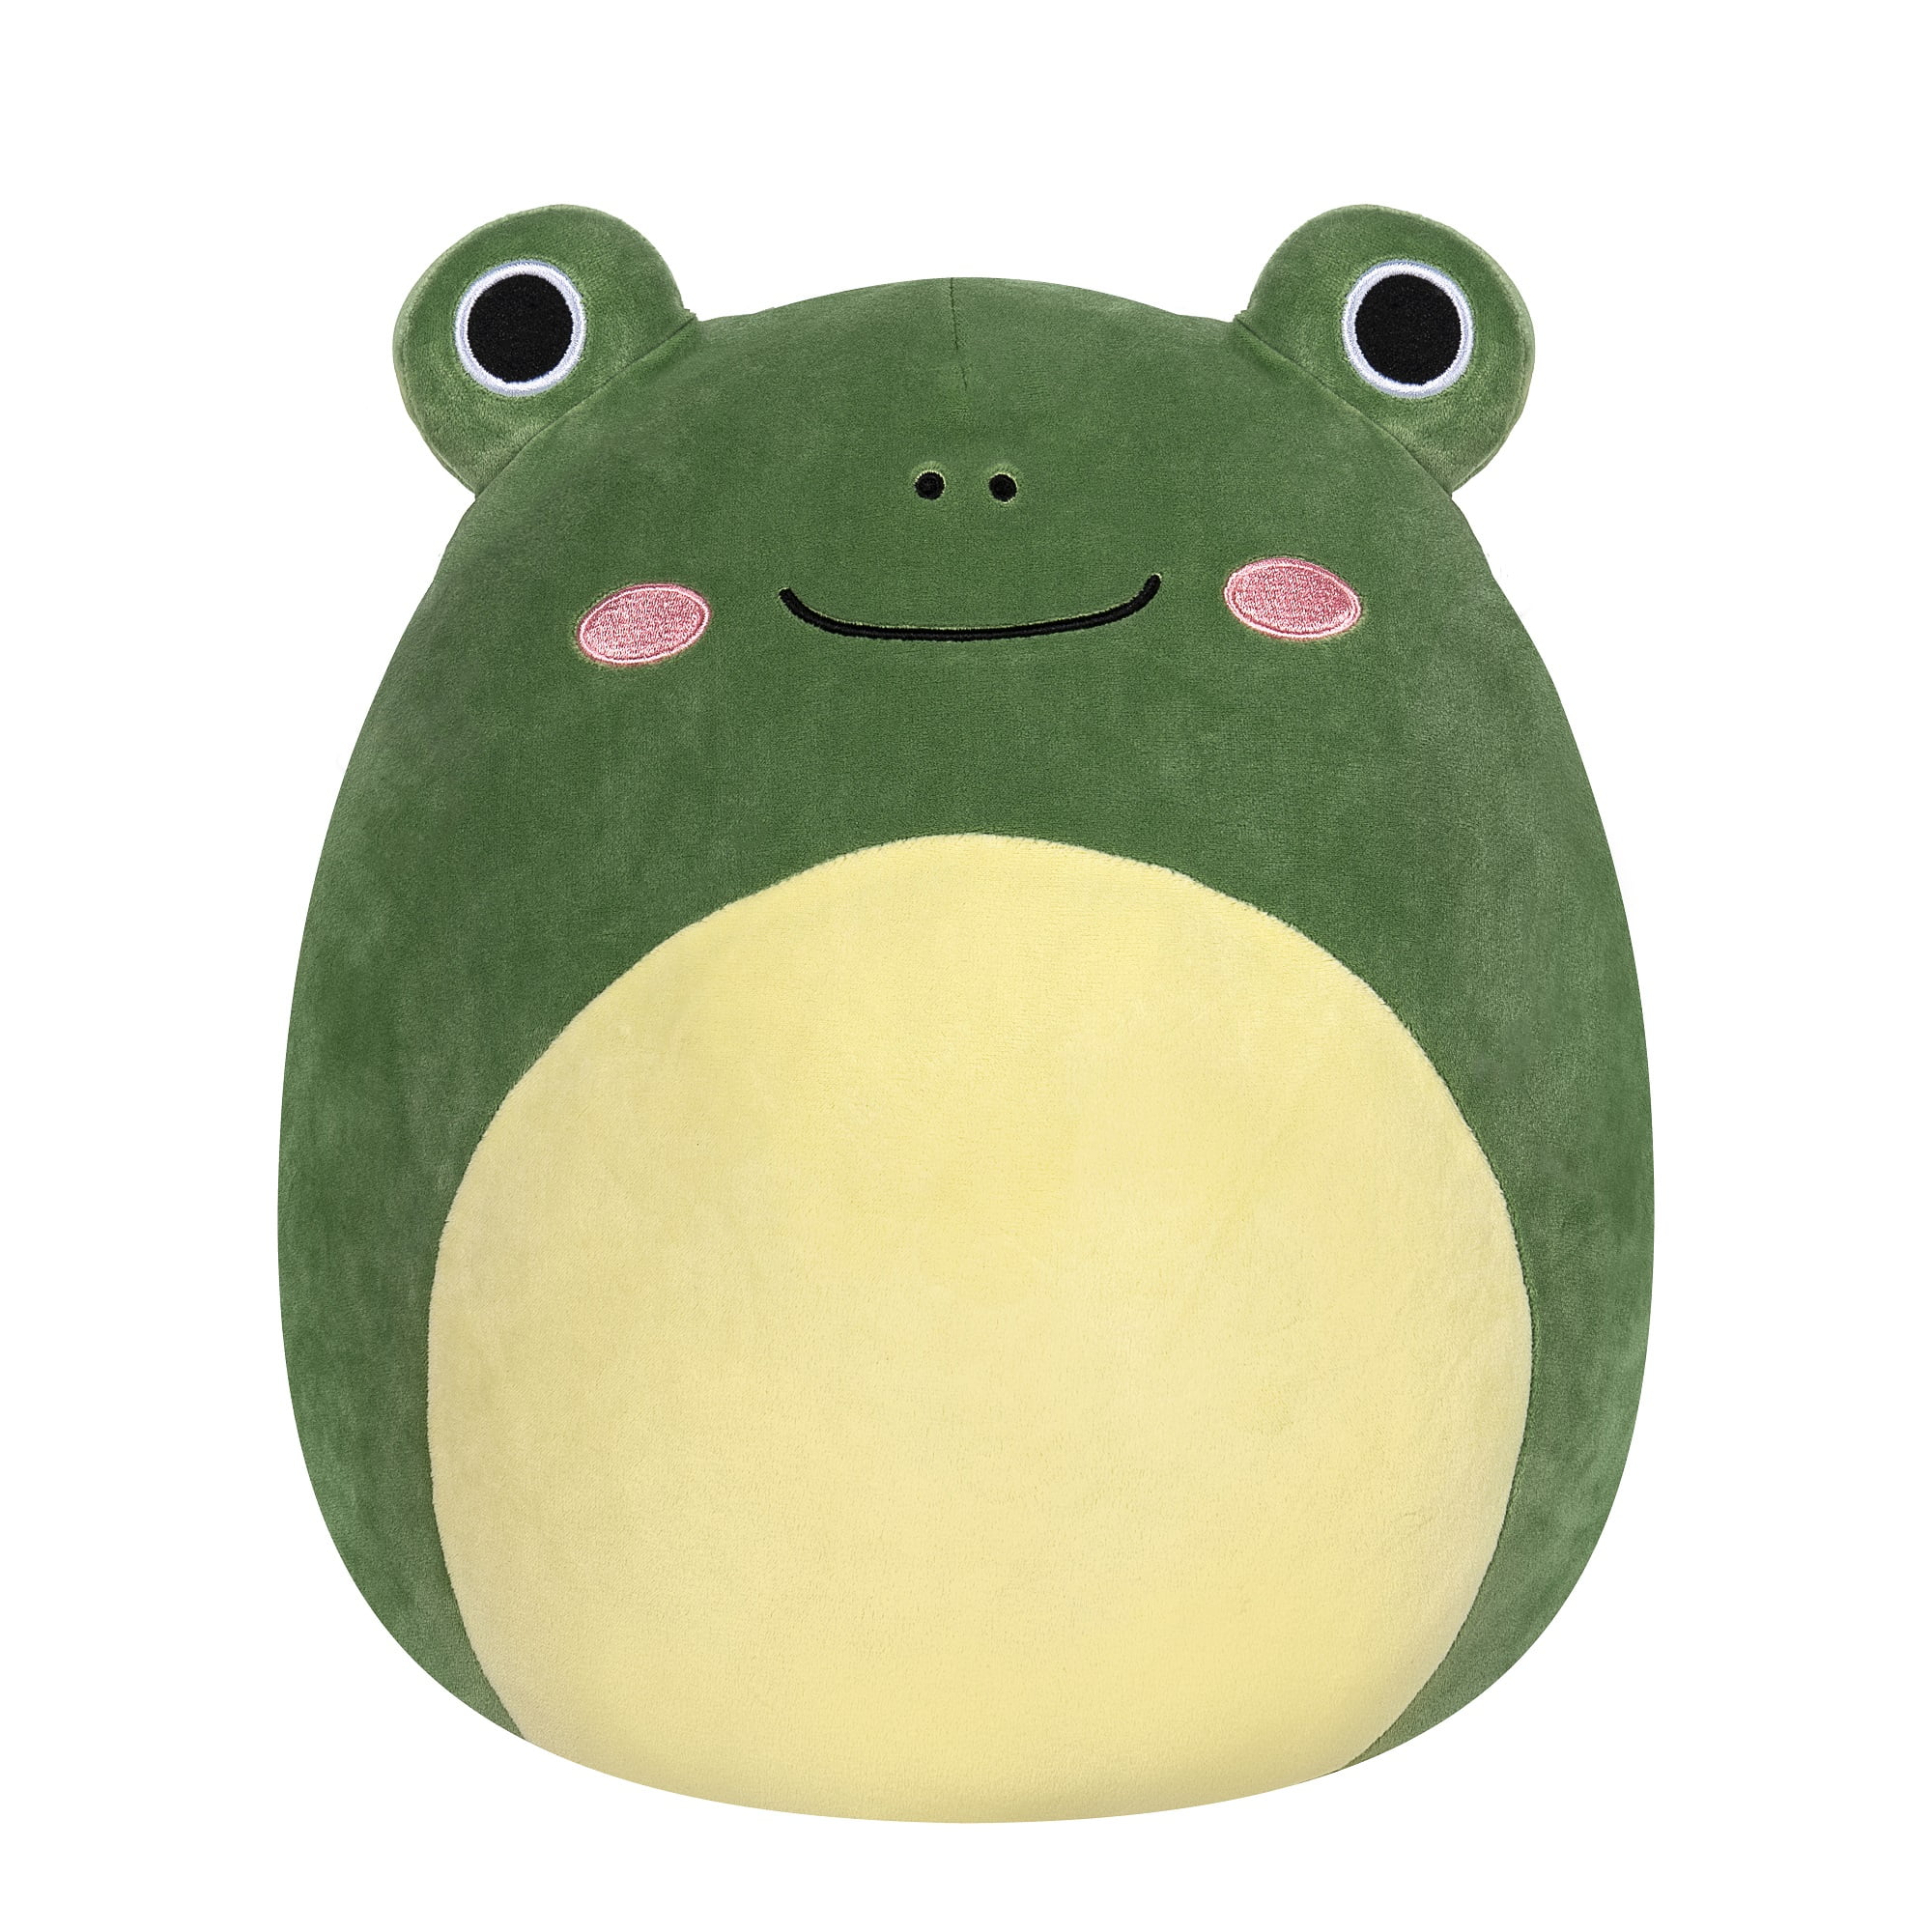 Squishmallows 14" Frog - Gloria, The Stuffed Animal Plush Toy